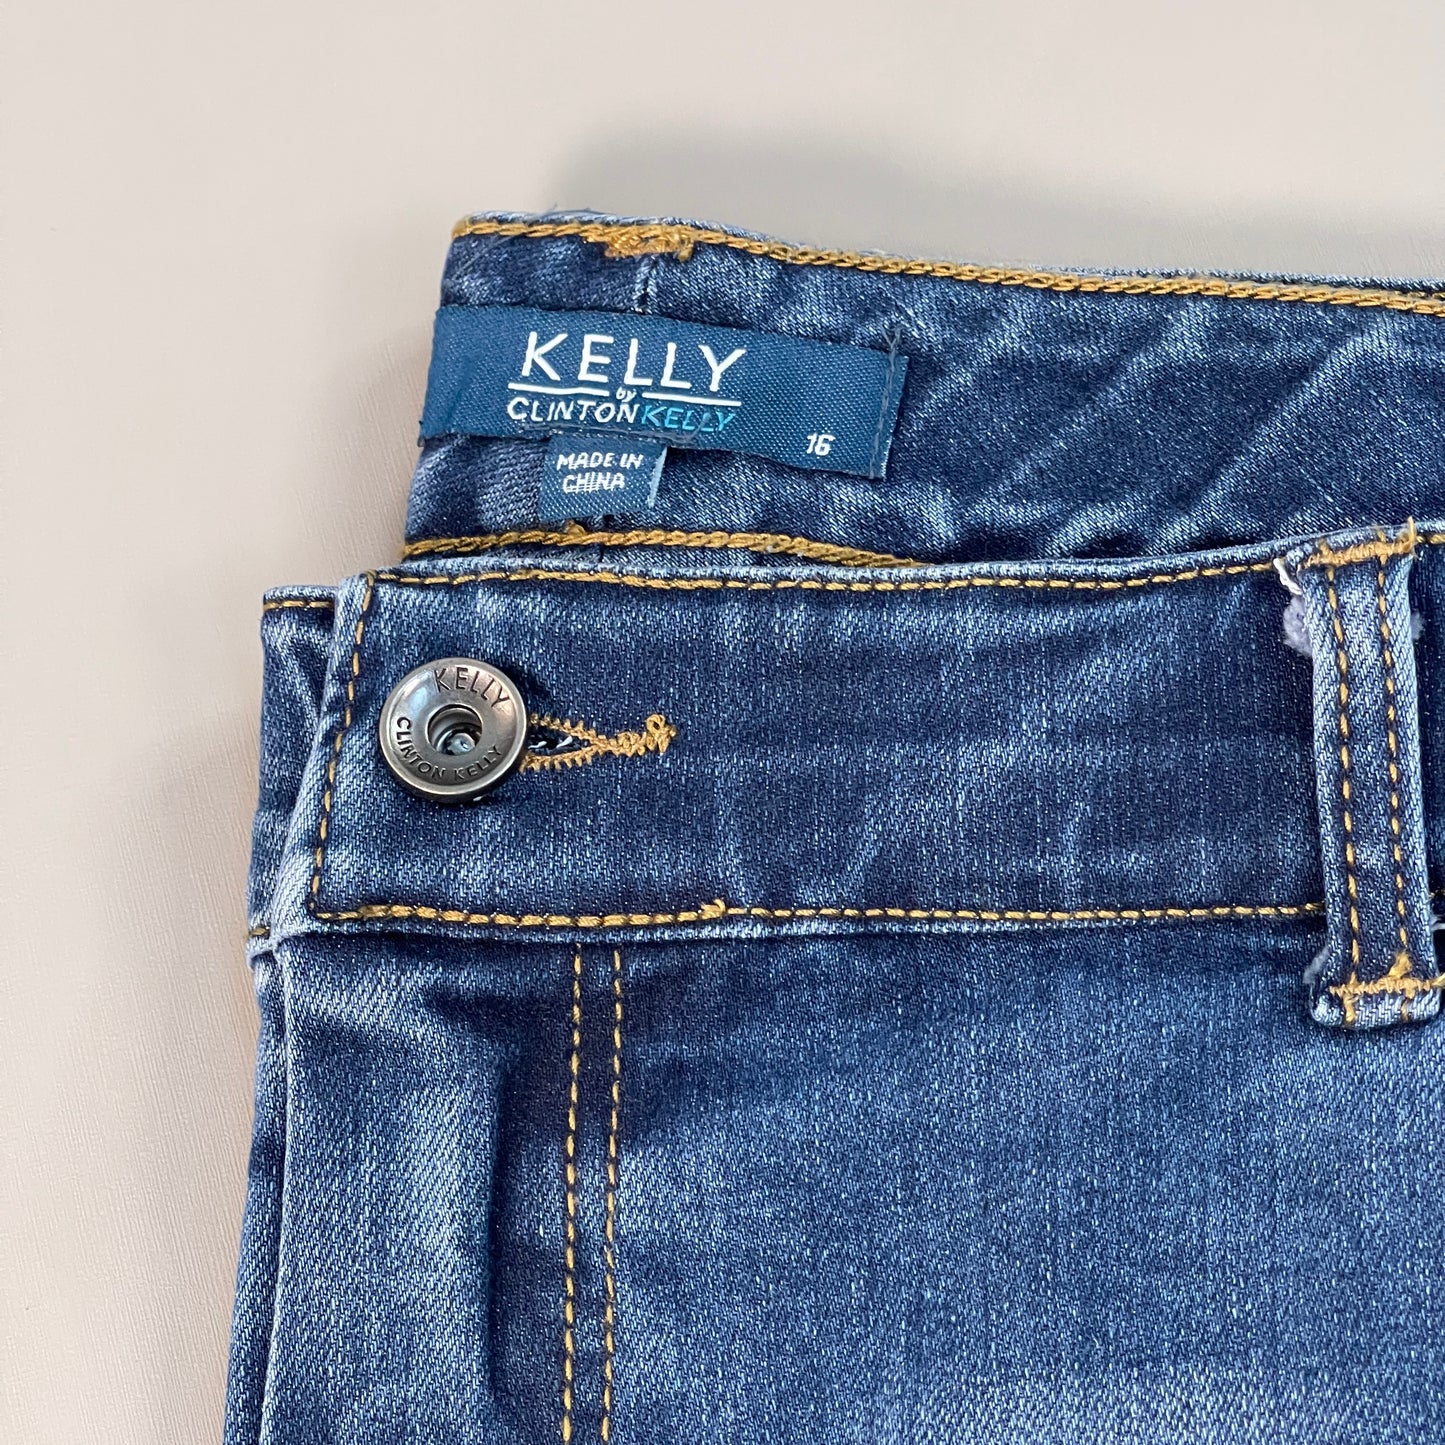 CLINTON KELLY Frayed Hem Jeans Women's Sz 16 Regular Mid Wash W/ Tan Striped Side(New)